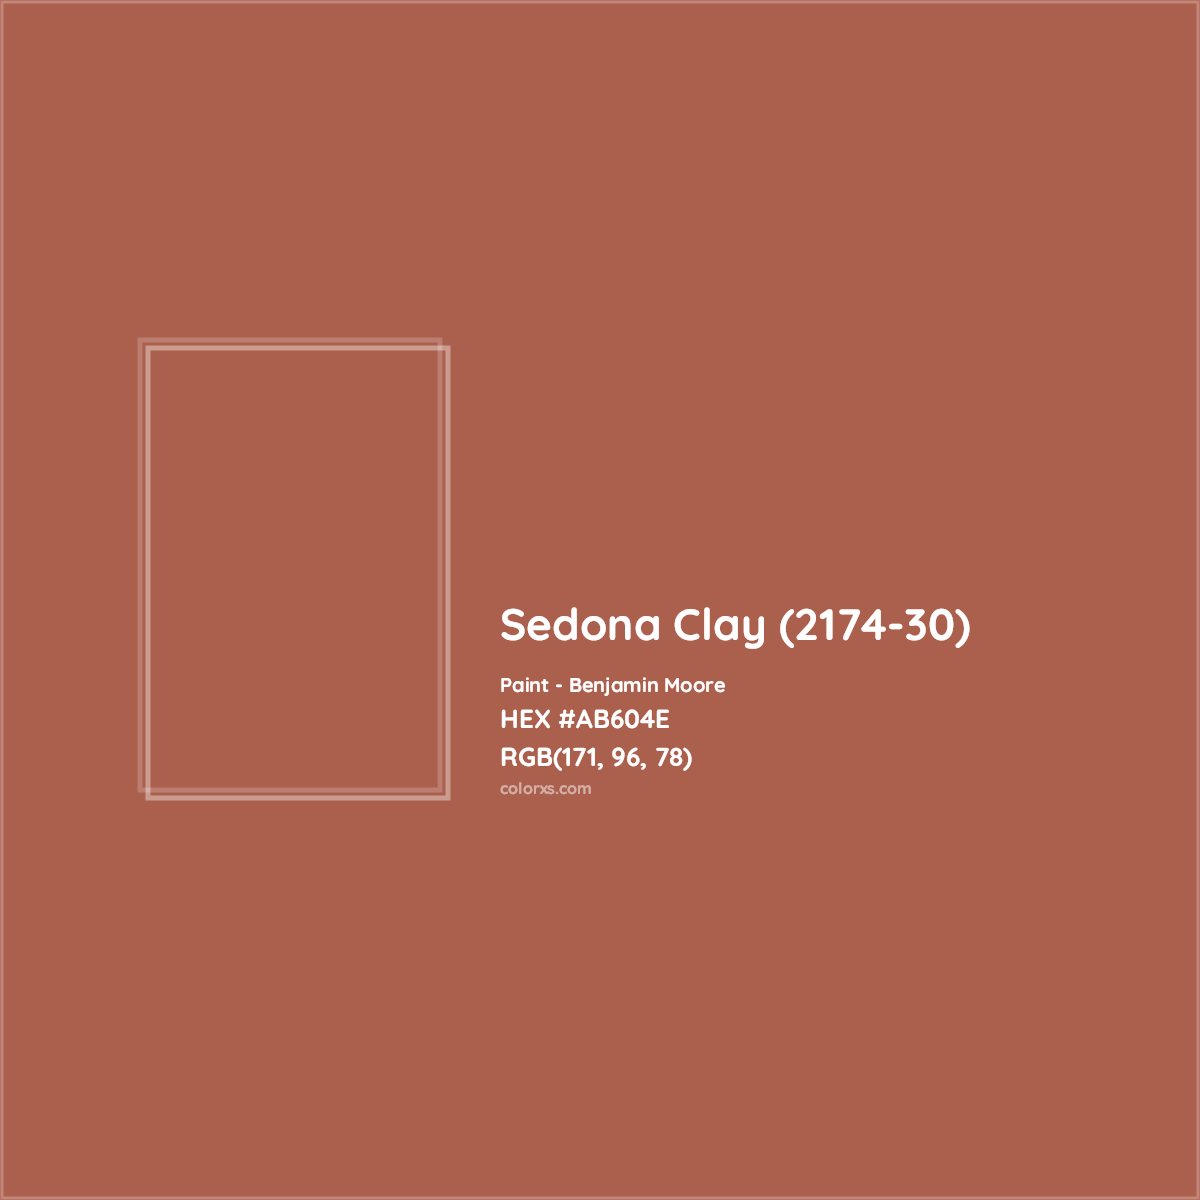 HEX #AB604E Sedona Clay (2174-30) Paint Benjamin Moore - Color Code